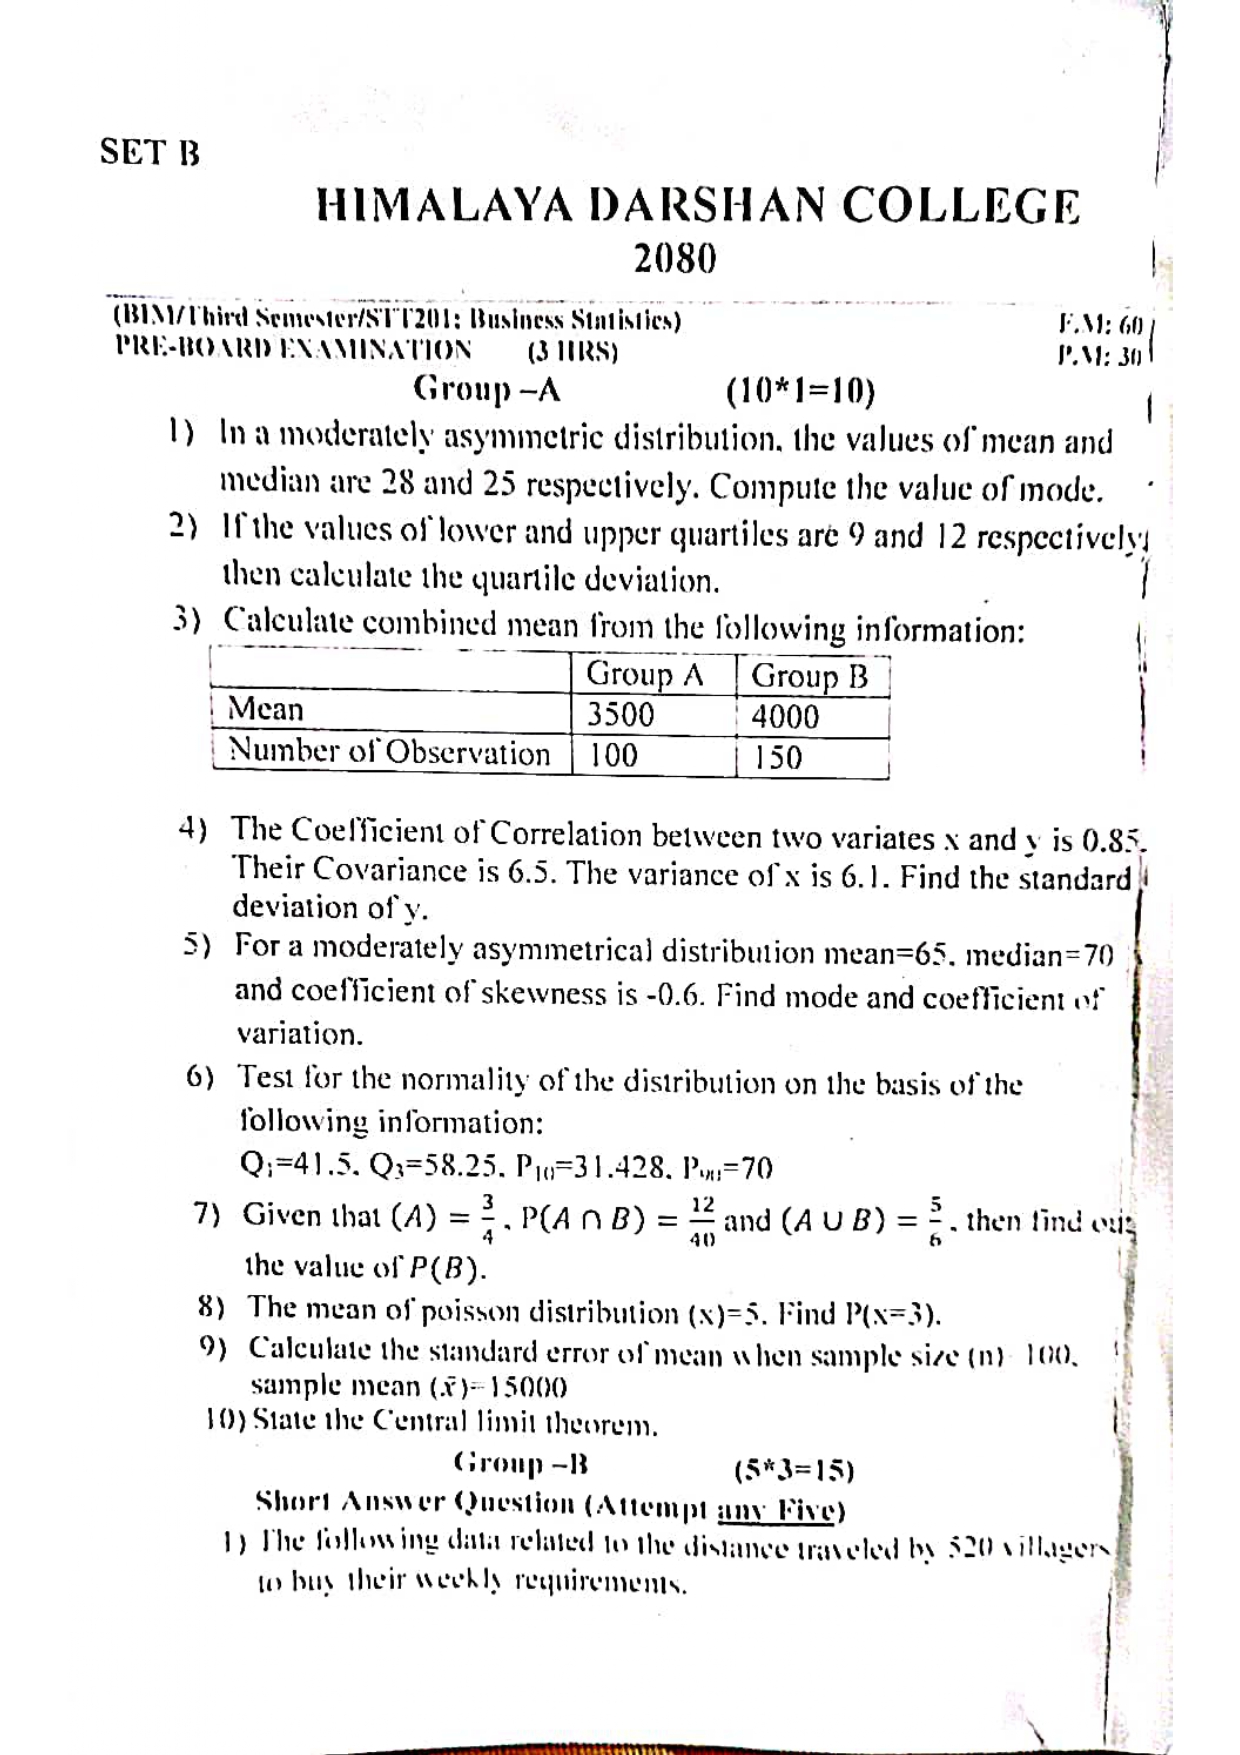 HDC BIM 3rd Sem Question set_page-0019